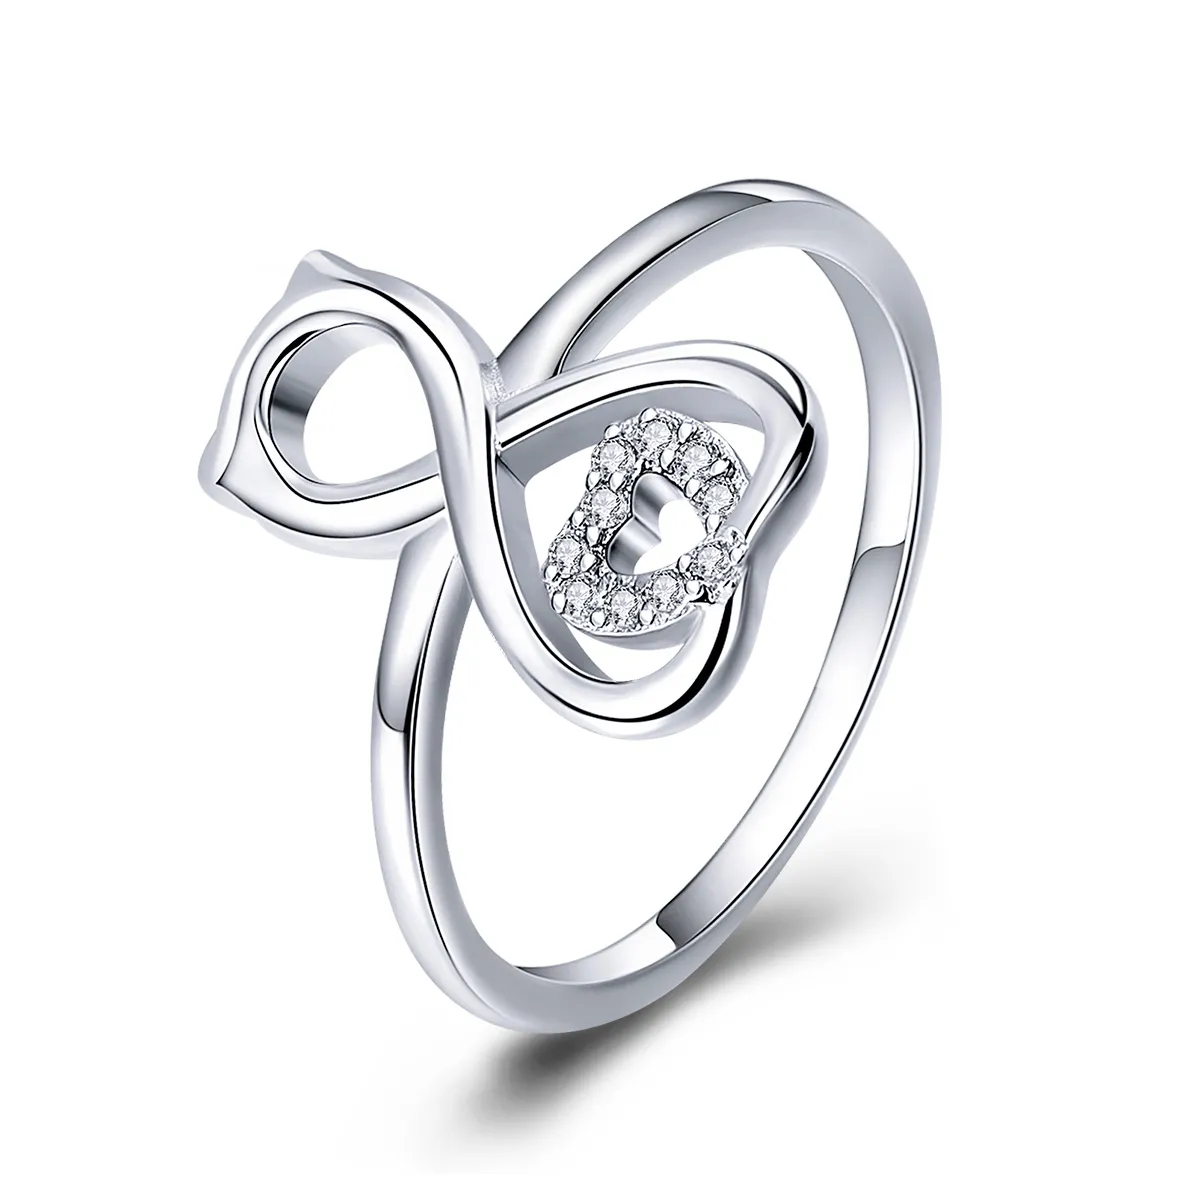 Pandora Style Silver Cat Love Ring - SCR417